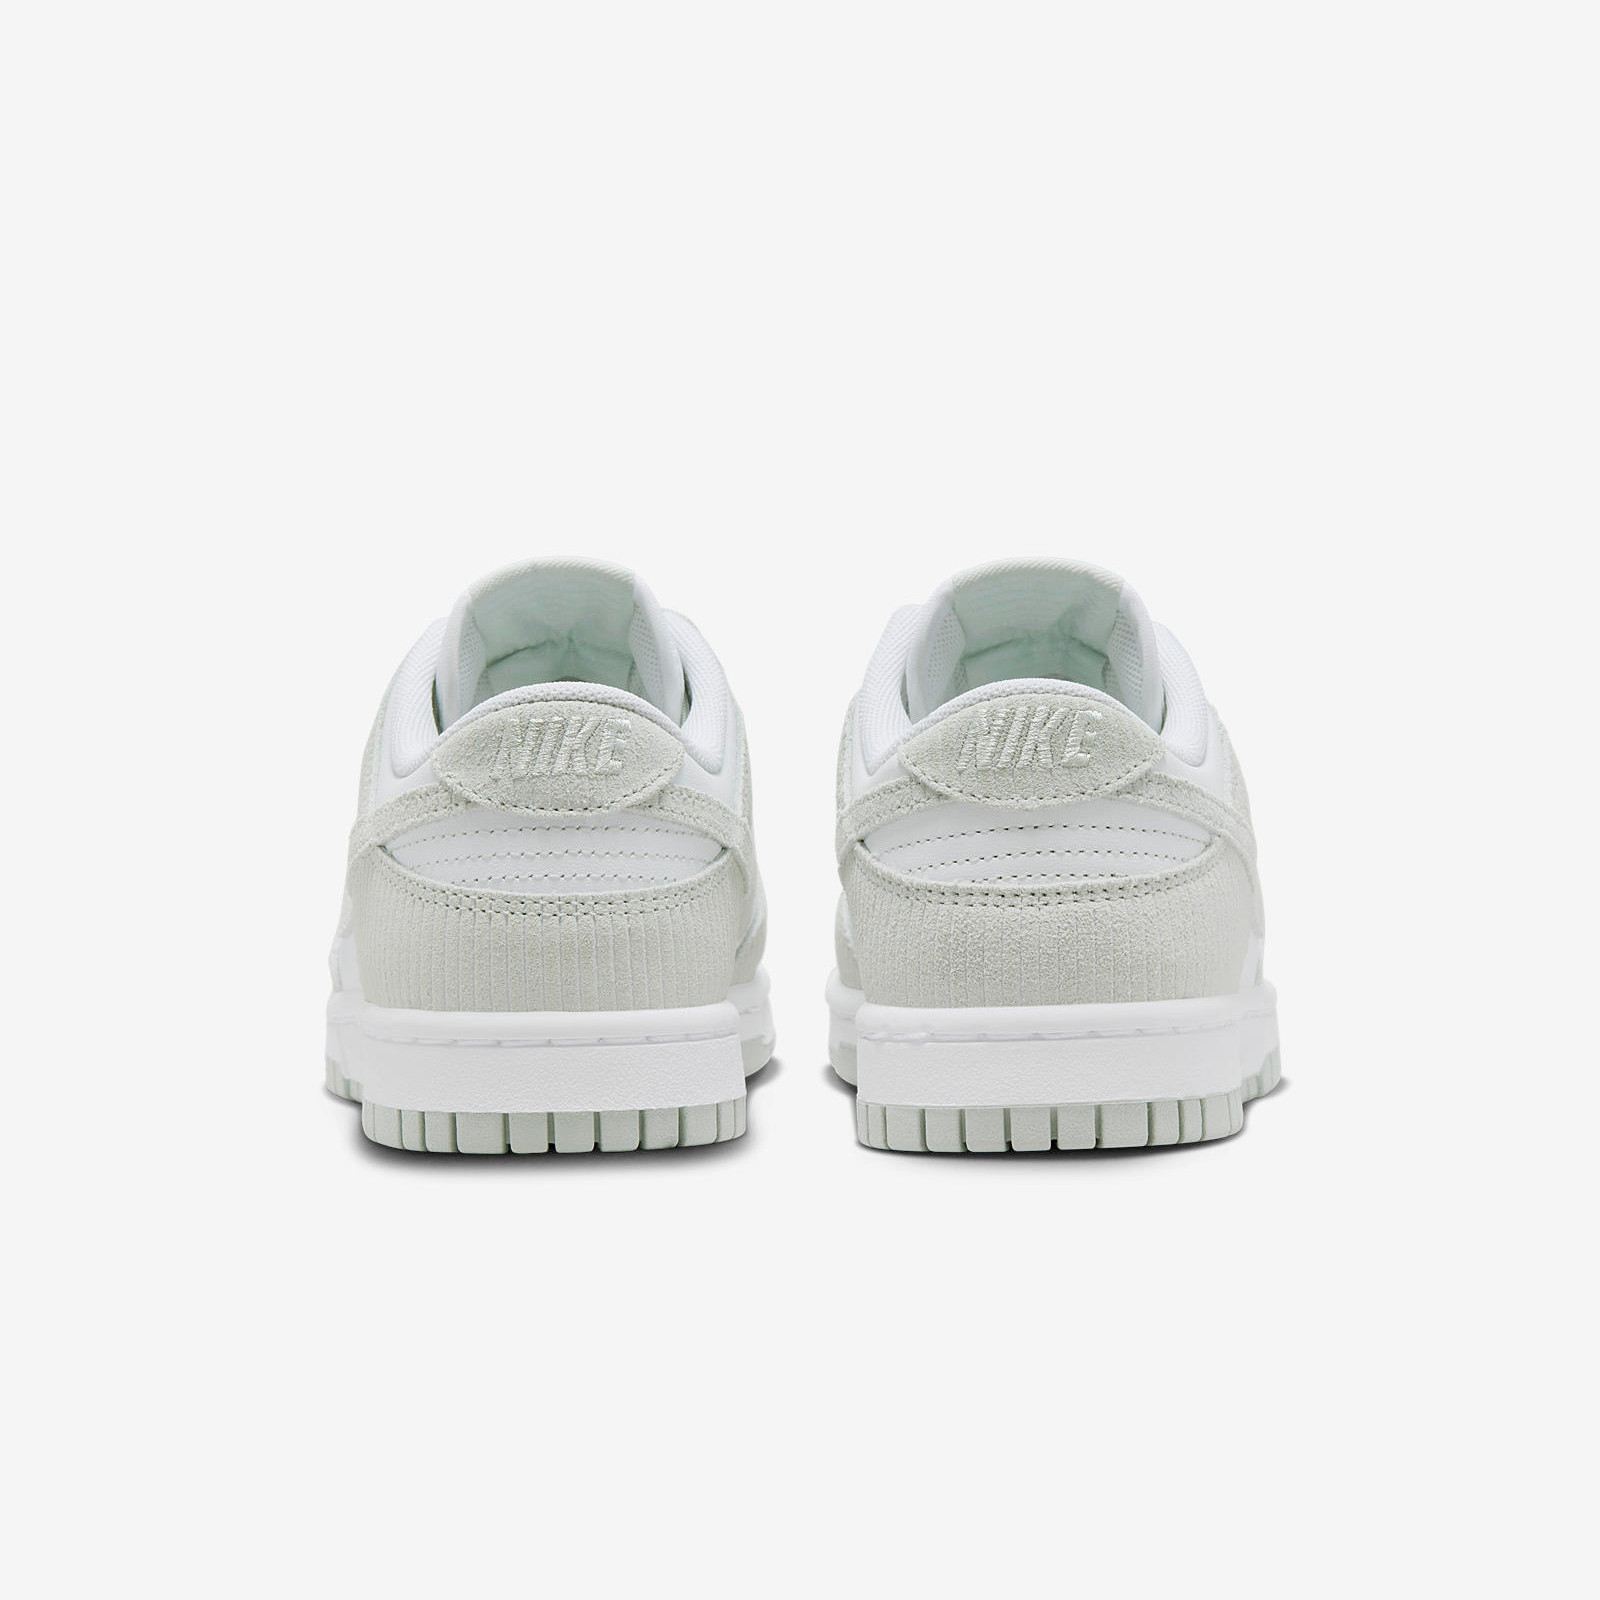 Nike Dunk Low
White / Light Silver